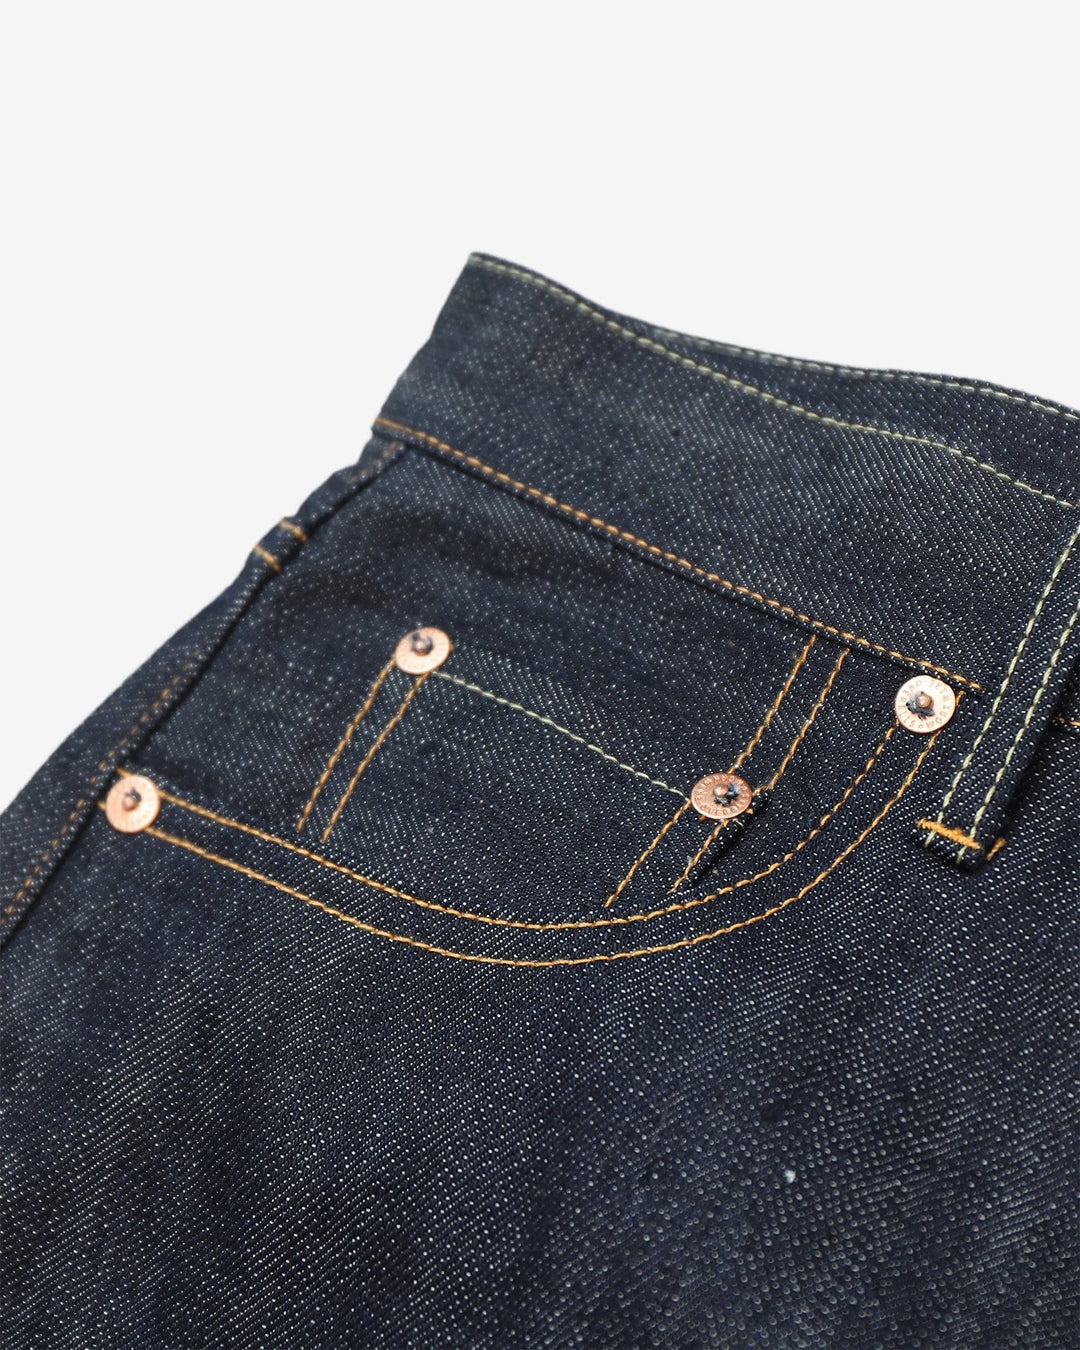 Workware - Weekend Wide Jeans #497 Denim - Unwashed